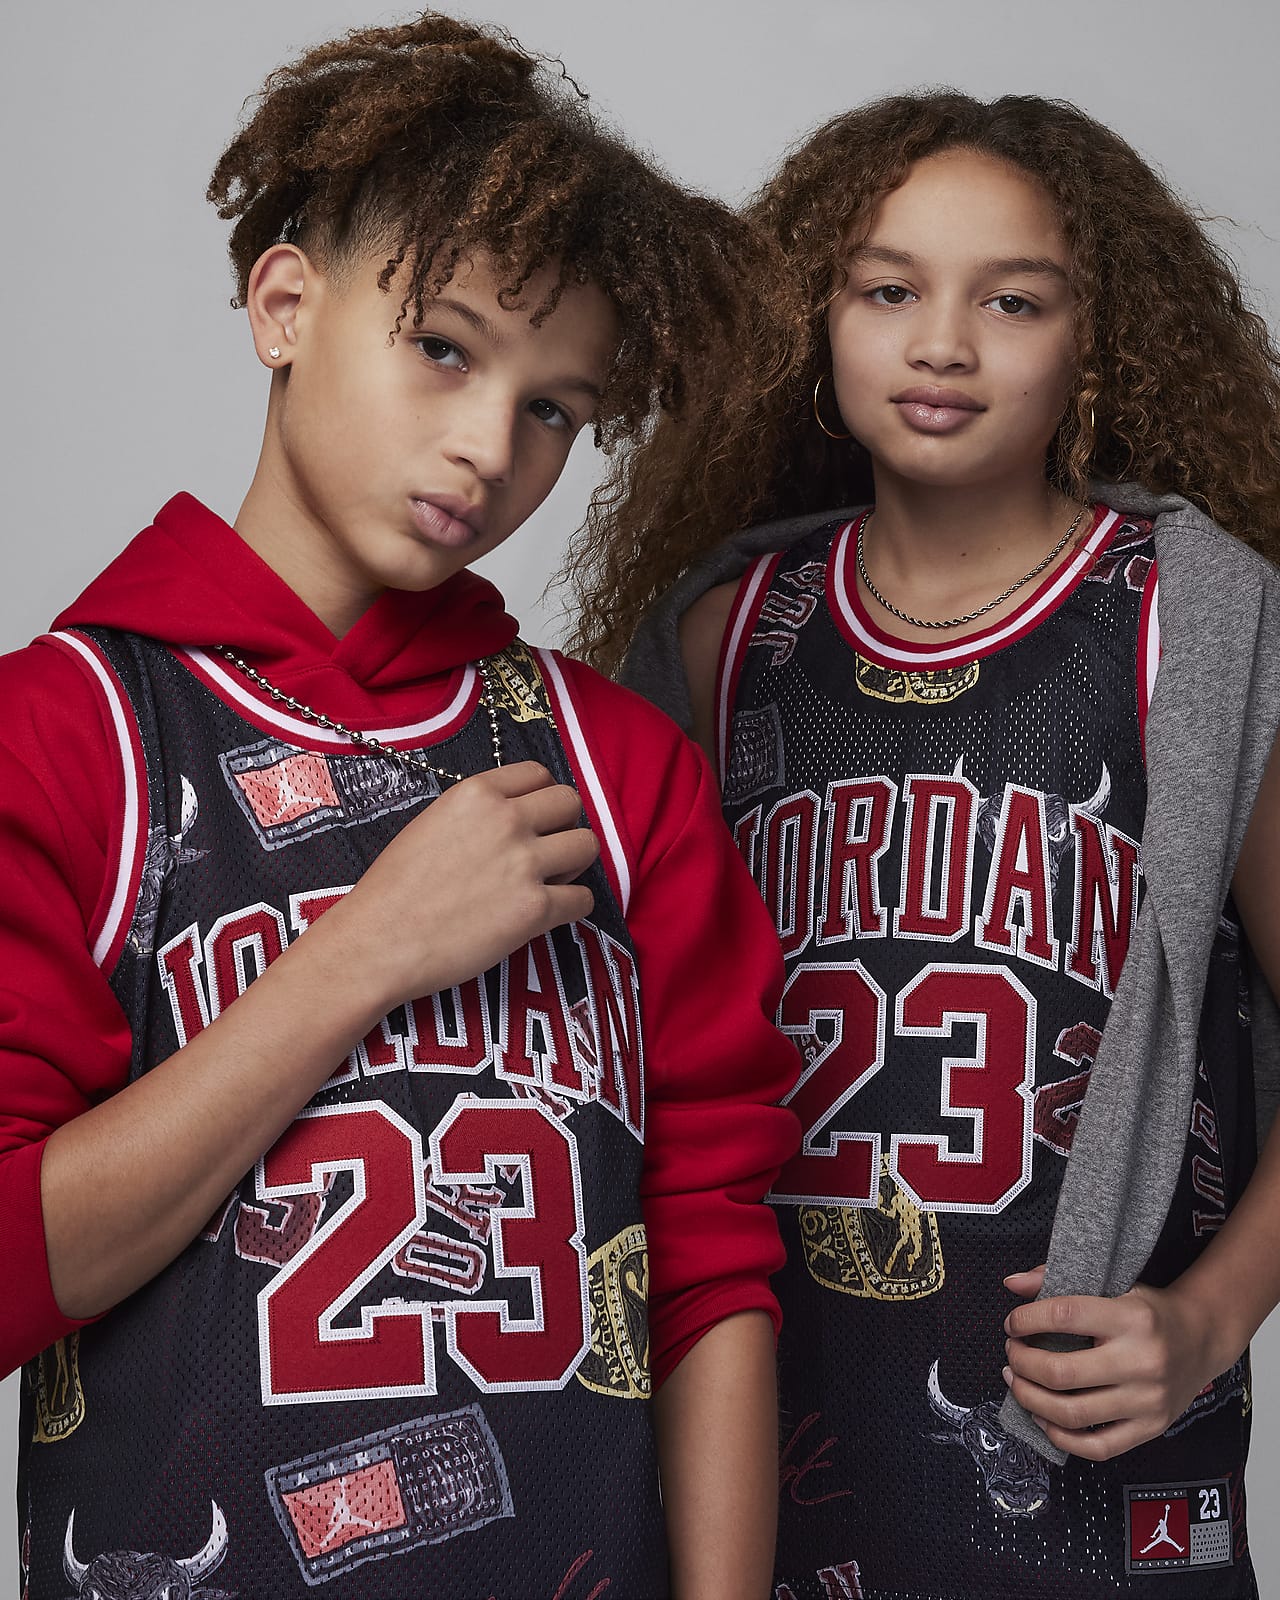 Jordan23 Big Kids\' Printed Jersey.